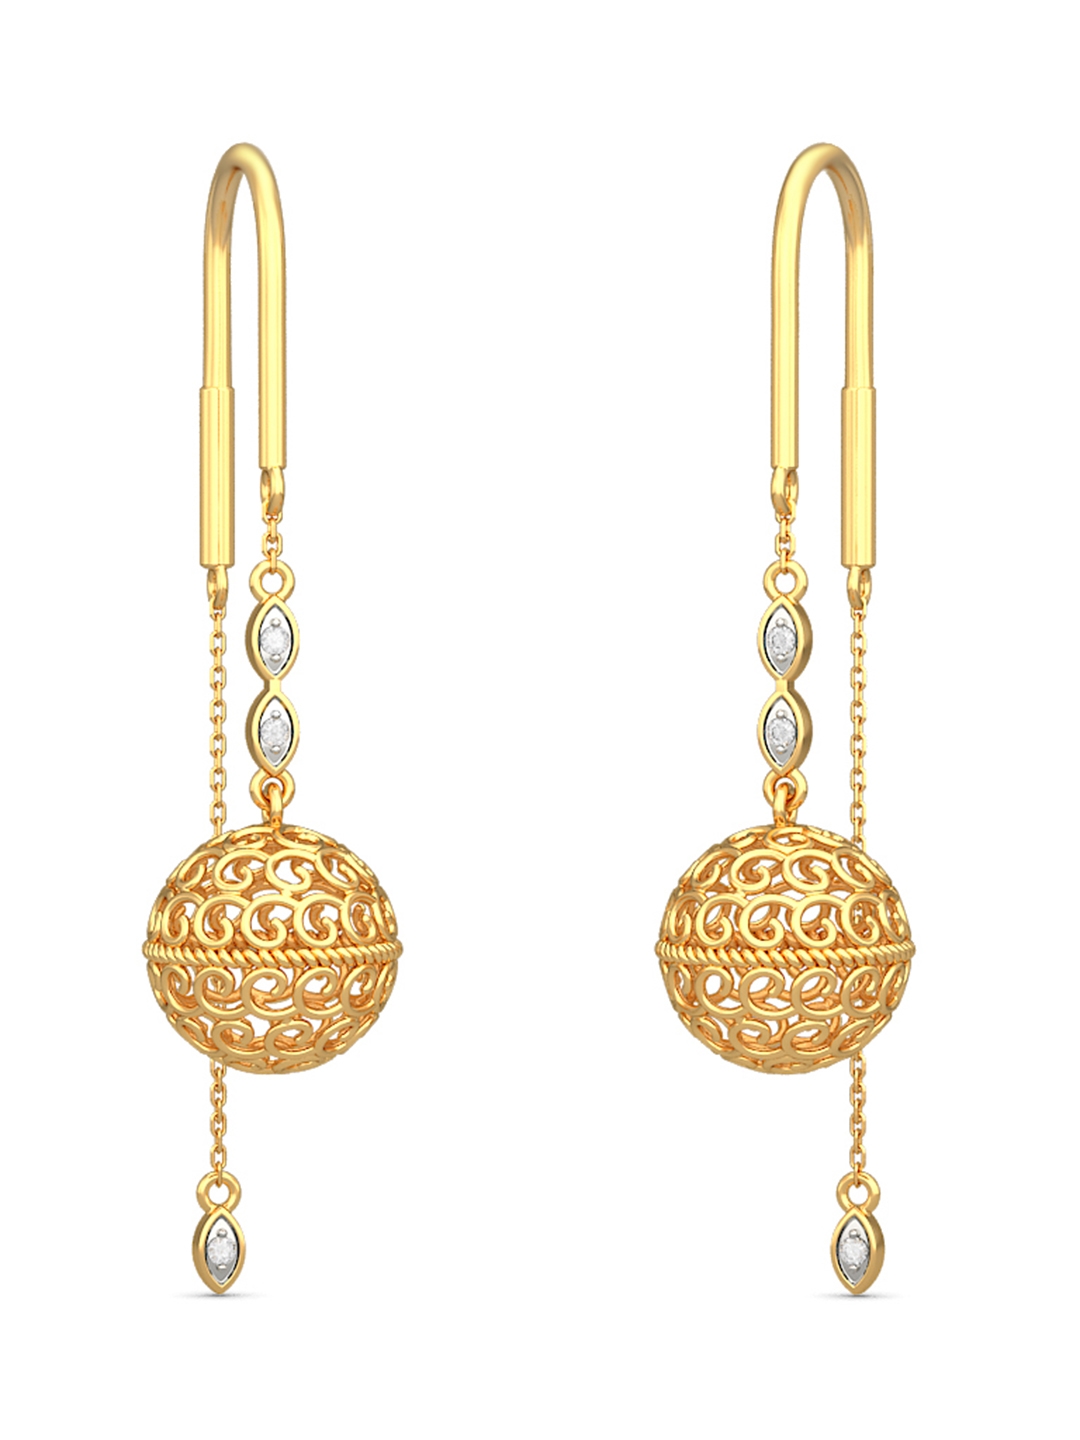 Buy Gold Sui Dhaga Earrings Online for Women  Vaibhav Jewellers